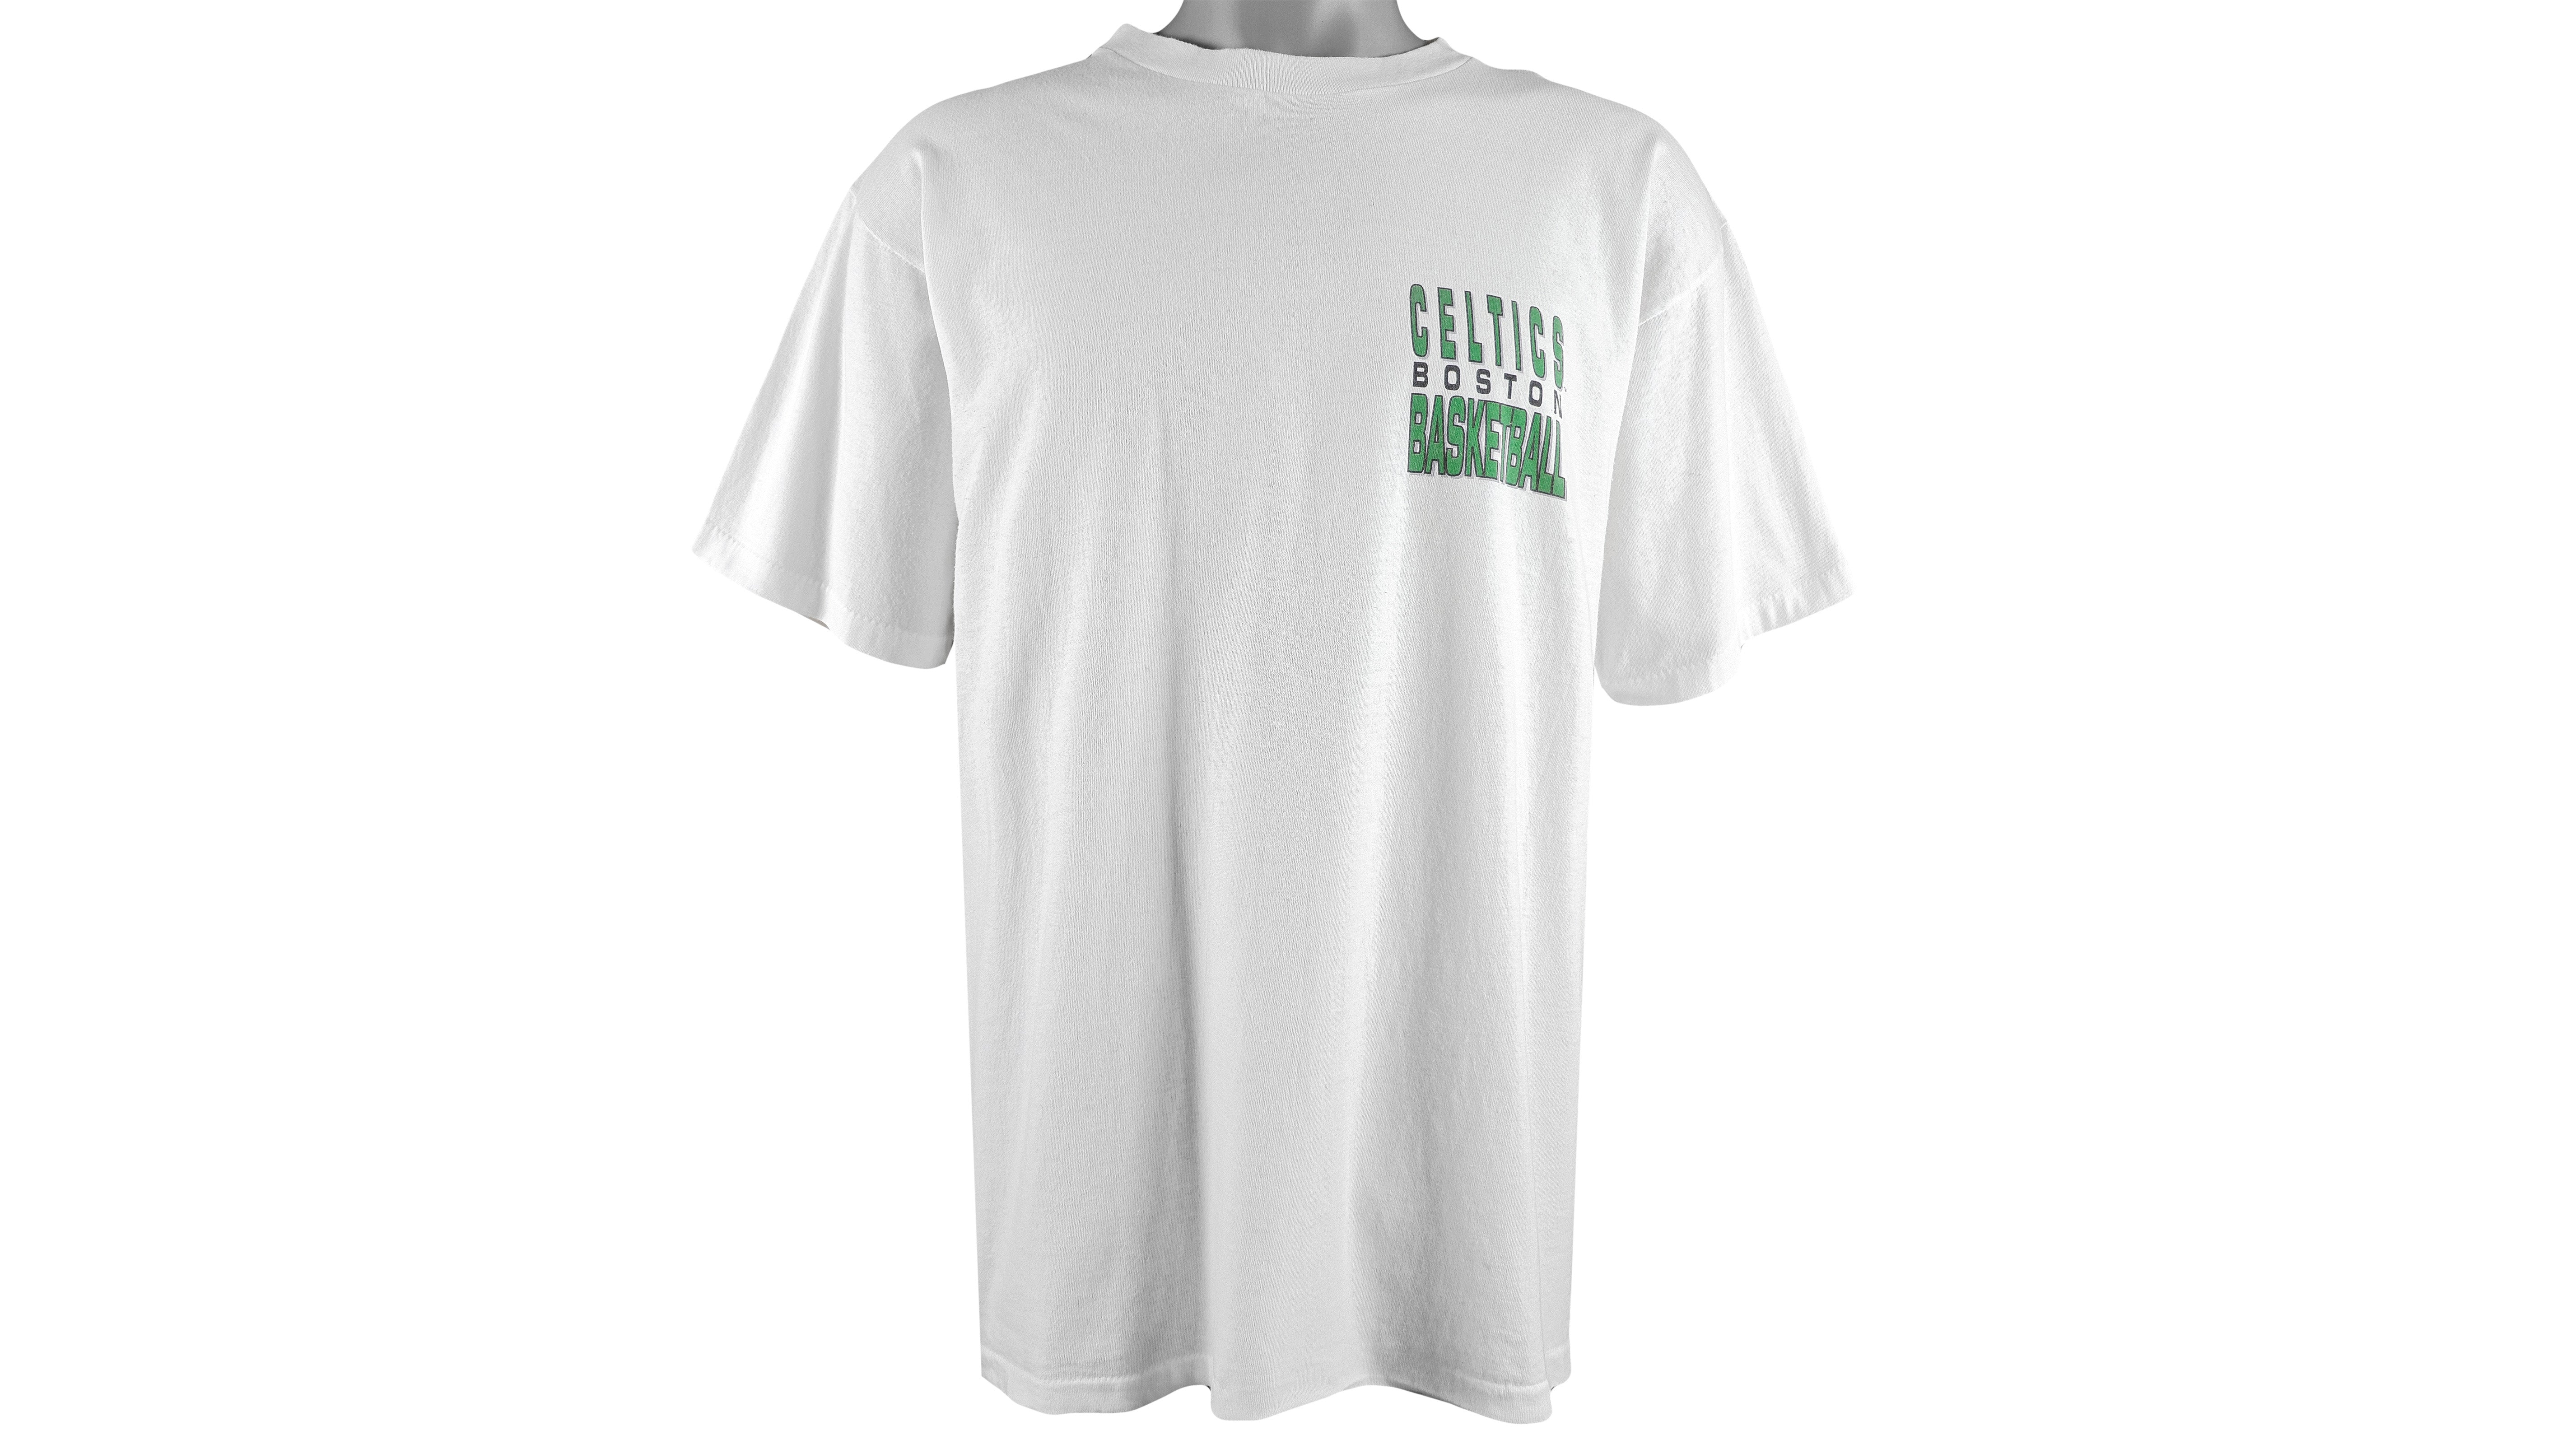 Vintage 1990 Larry Bird Boston Celtics T-shirt by Salem